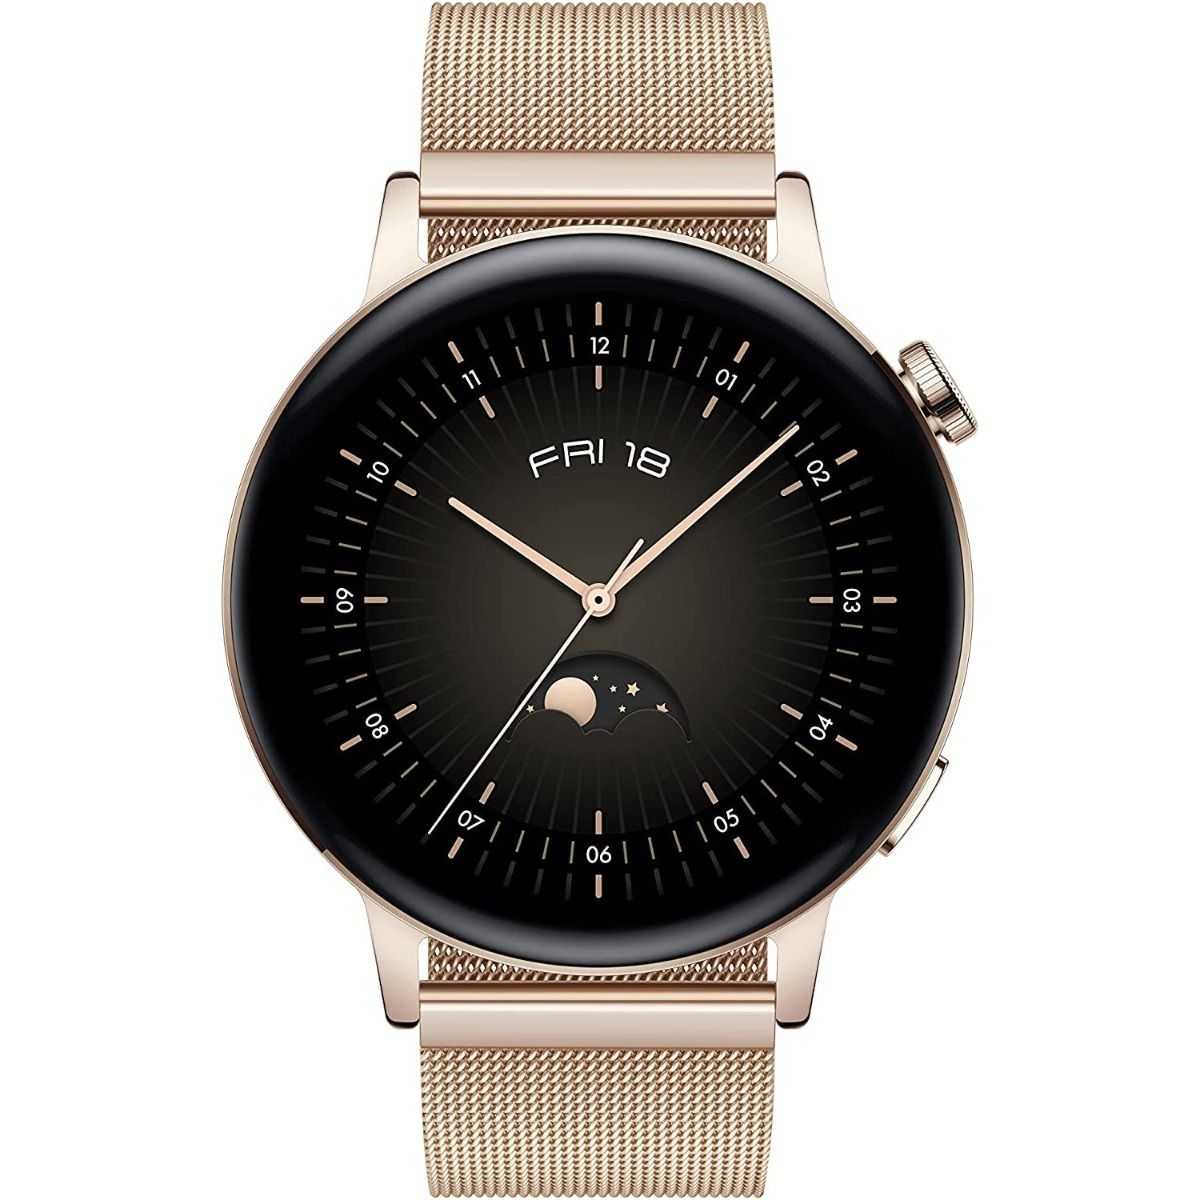 Huawei GT 3 Elegant 42mm Watch - Light Gold - 55027151